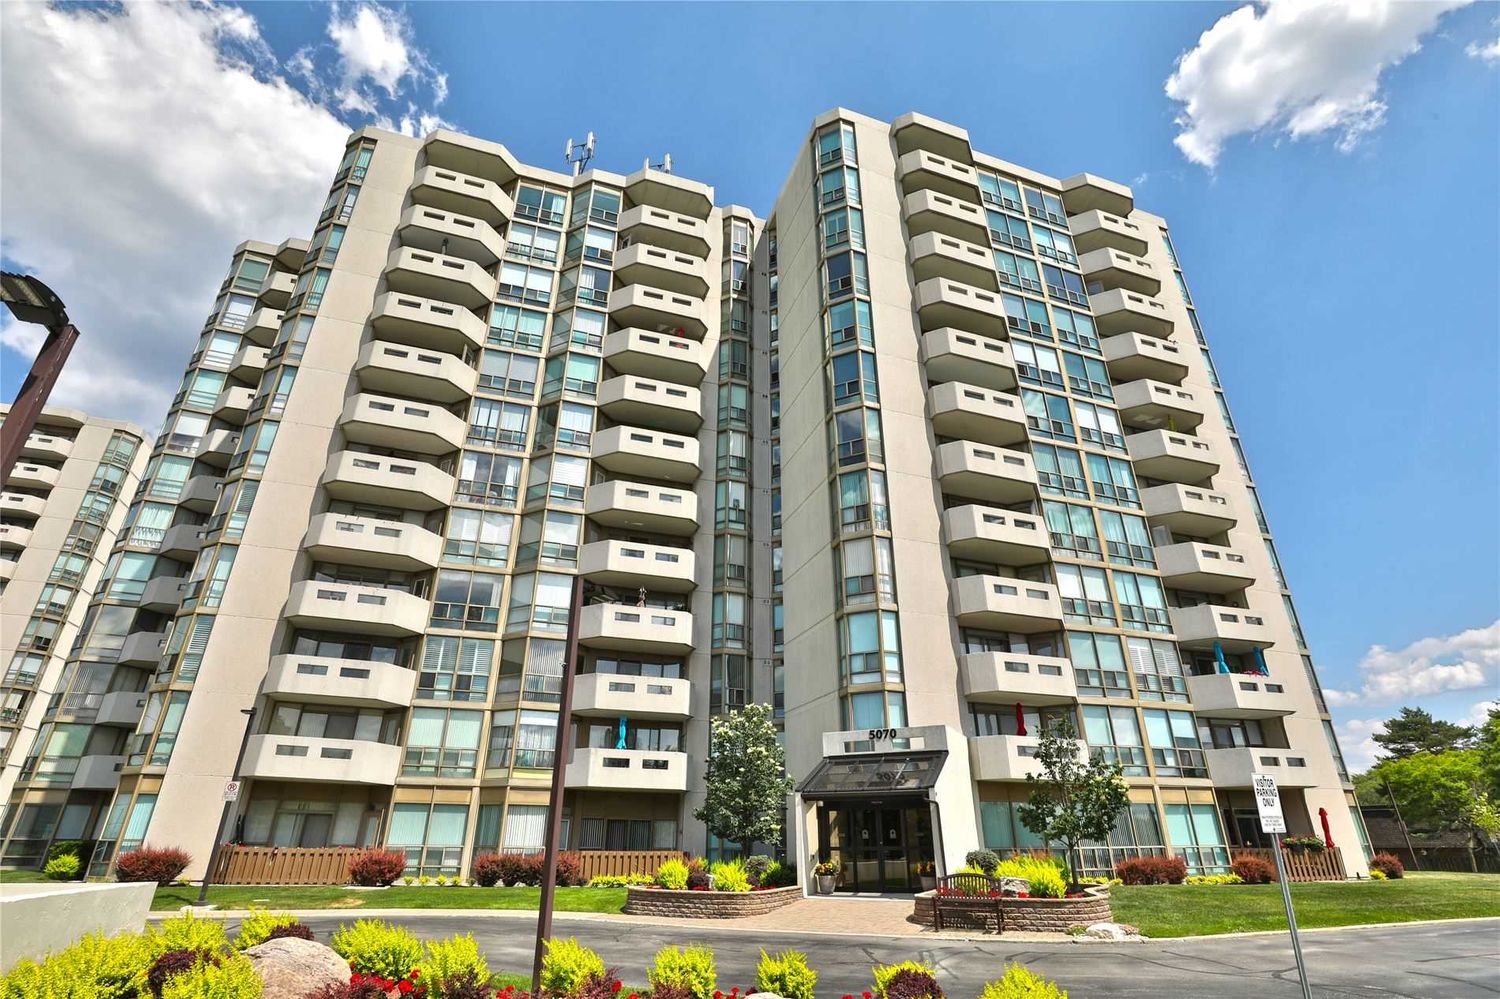 5070 Pinedale Avenue. Pinedale Estates III Condos is located in  Burlington, Toronto - image #2 of 2